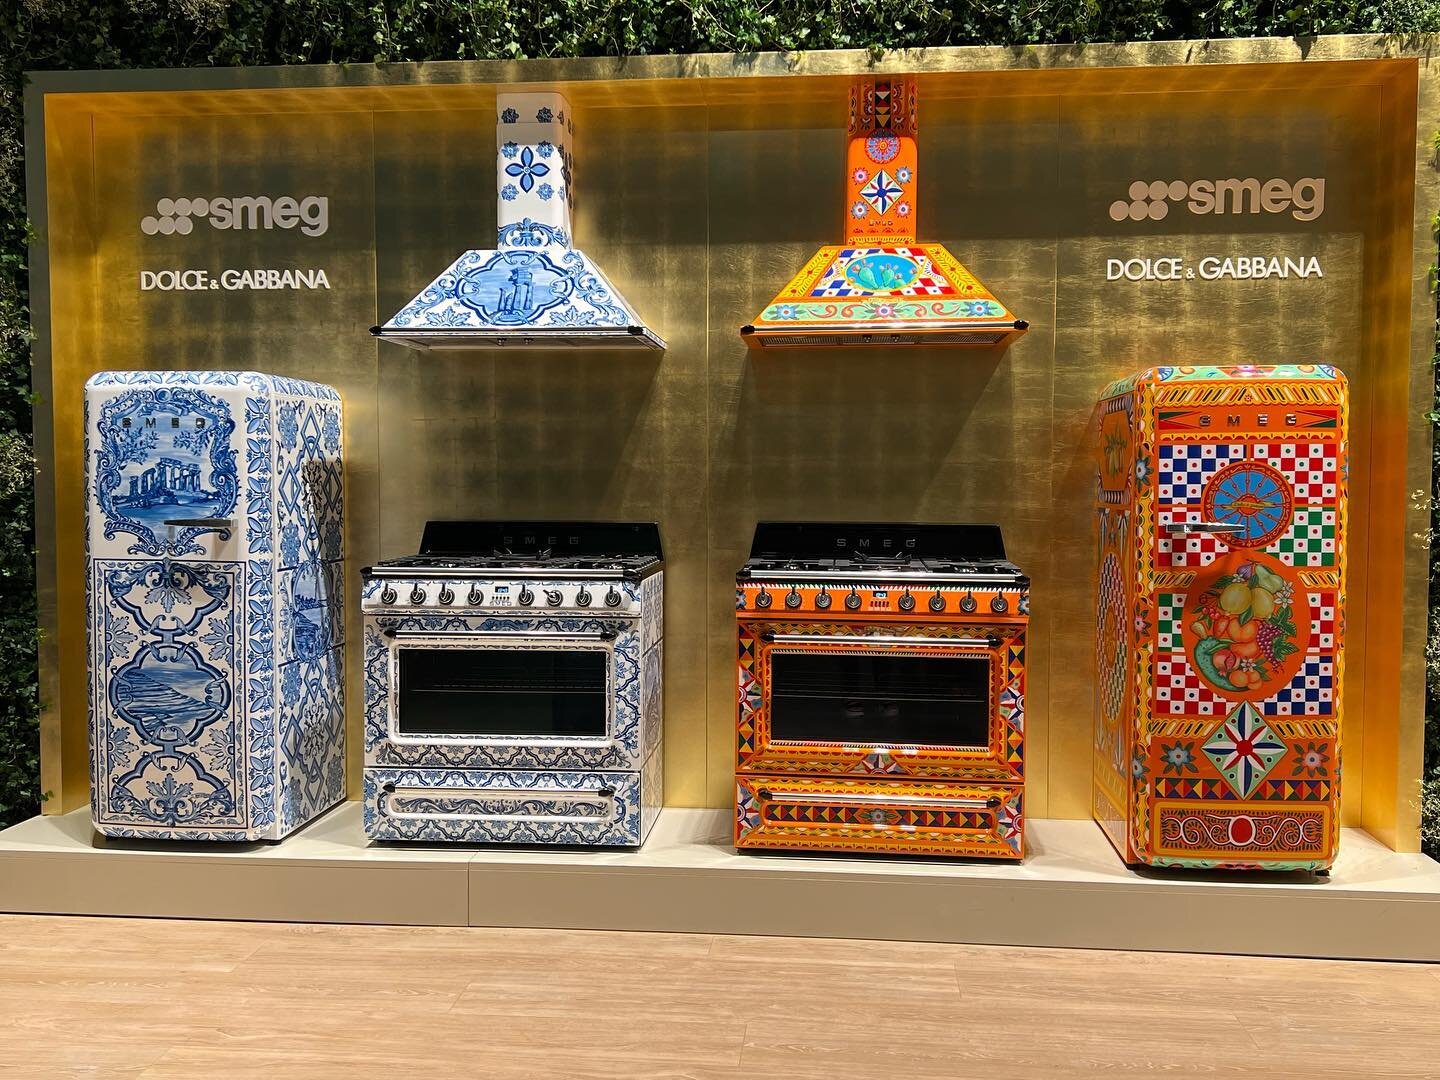 Smeg appliances with Dolce and Gabbana design